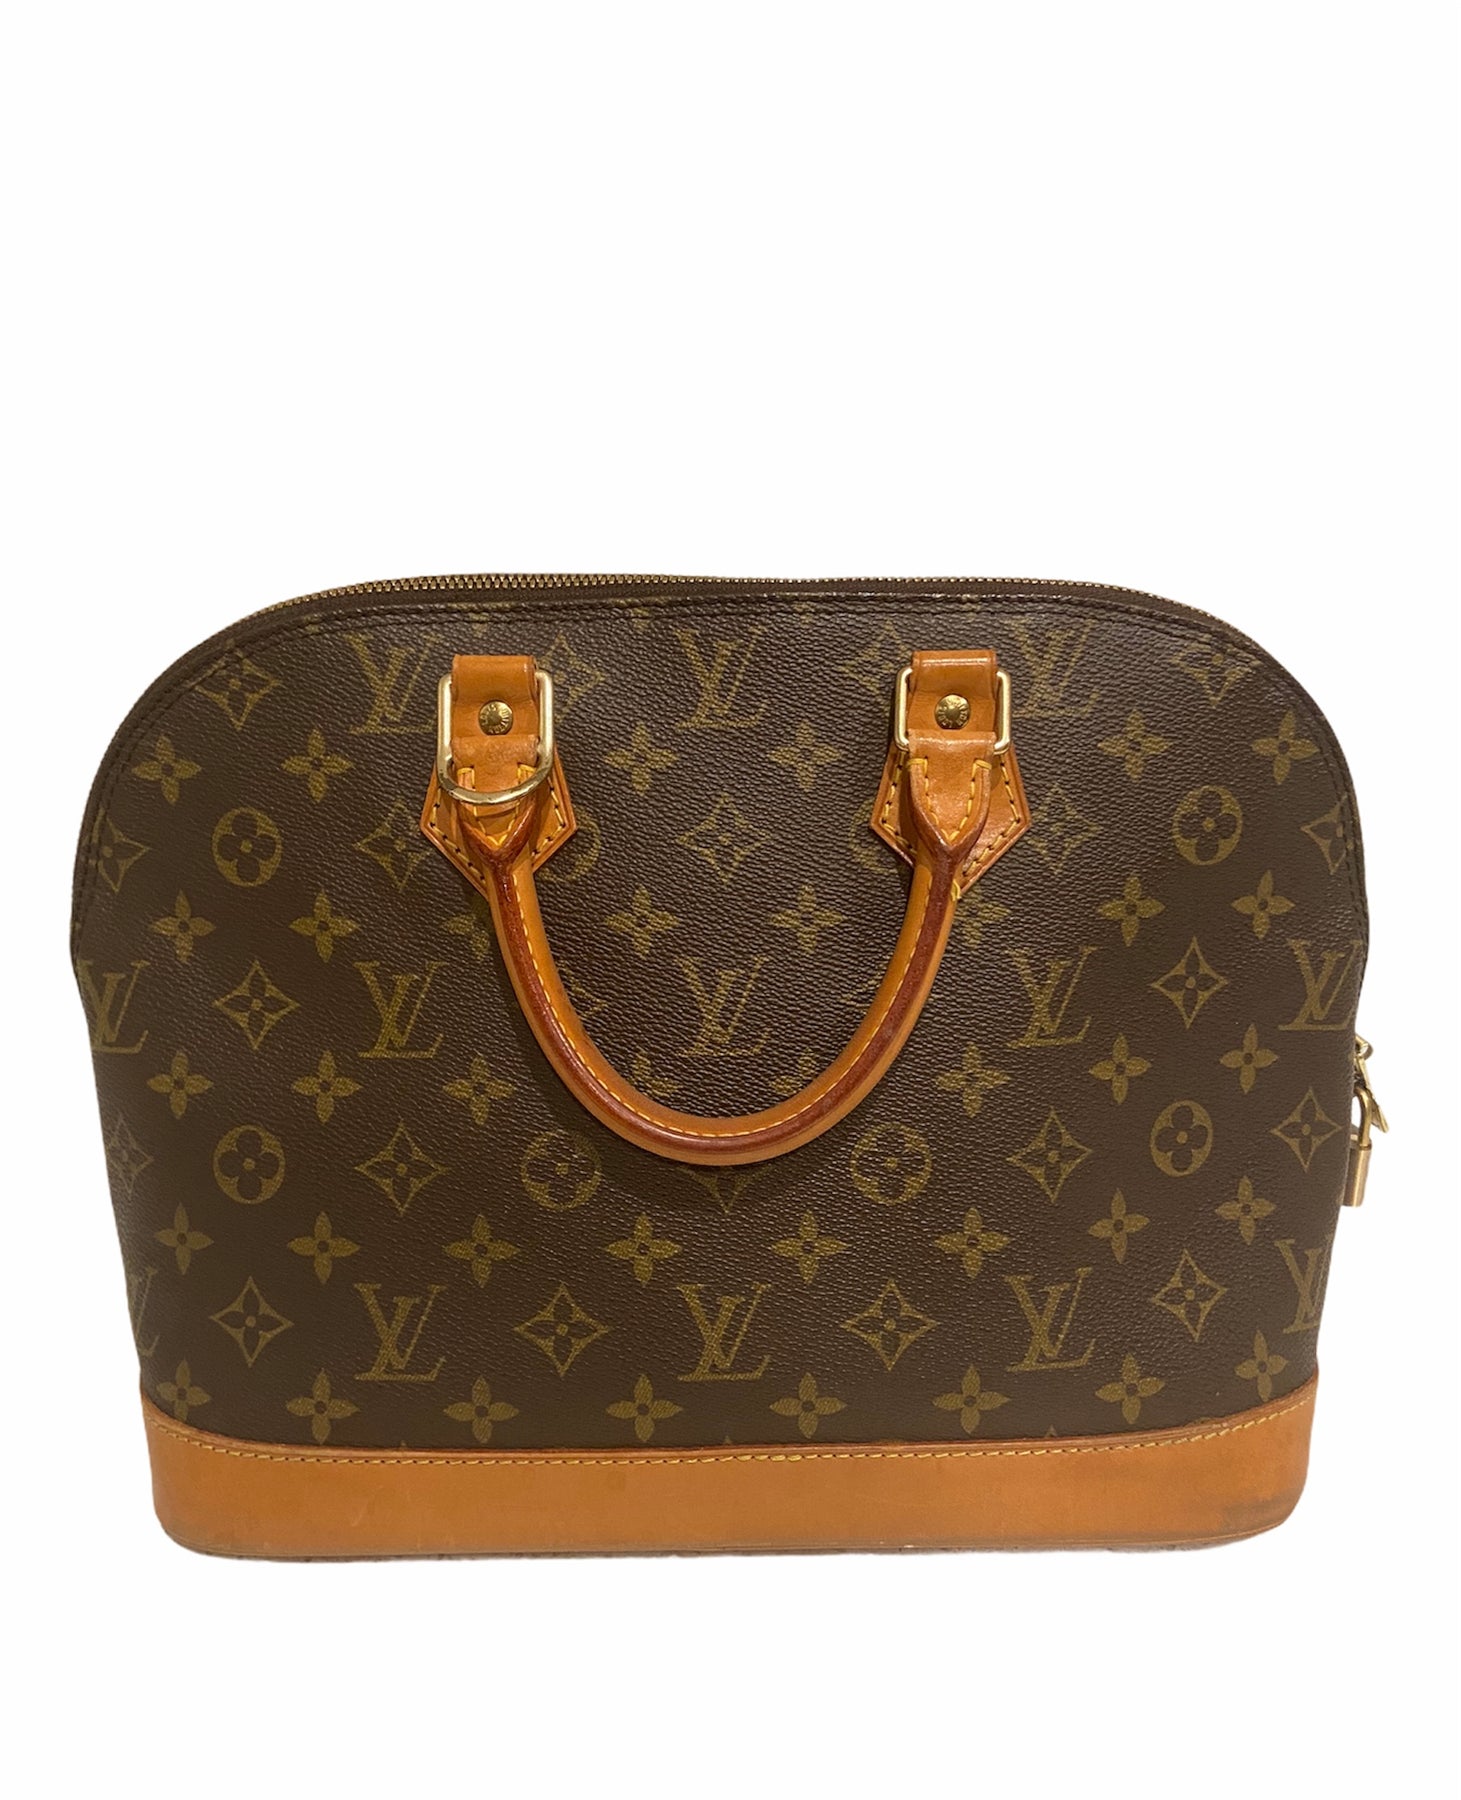 Louis Vuitton Monogram Alma PM Handbag – The Don's Luxury Goods